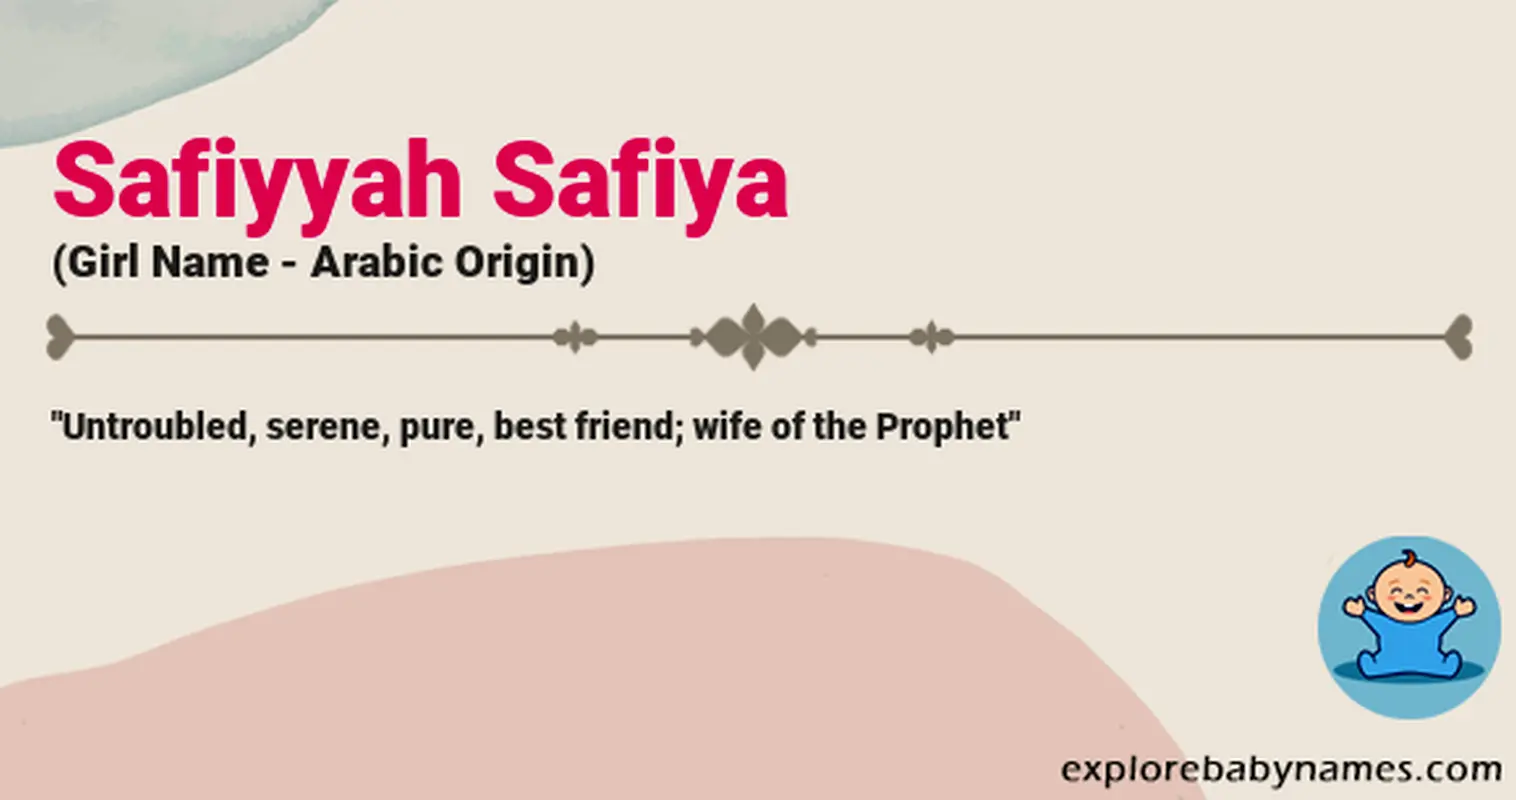 Meaning of Safiyyah Safiya